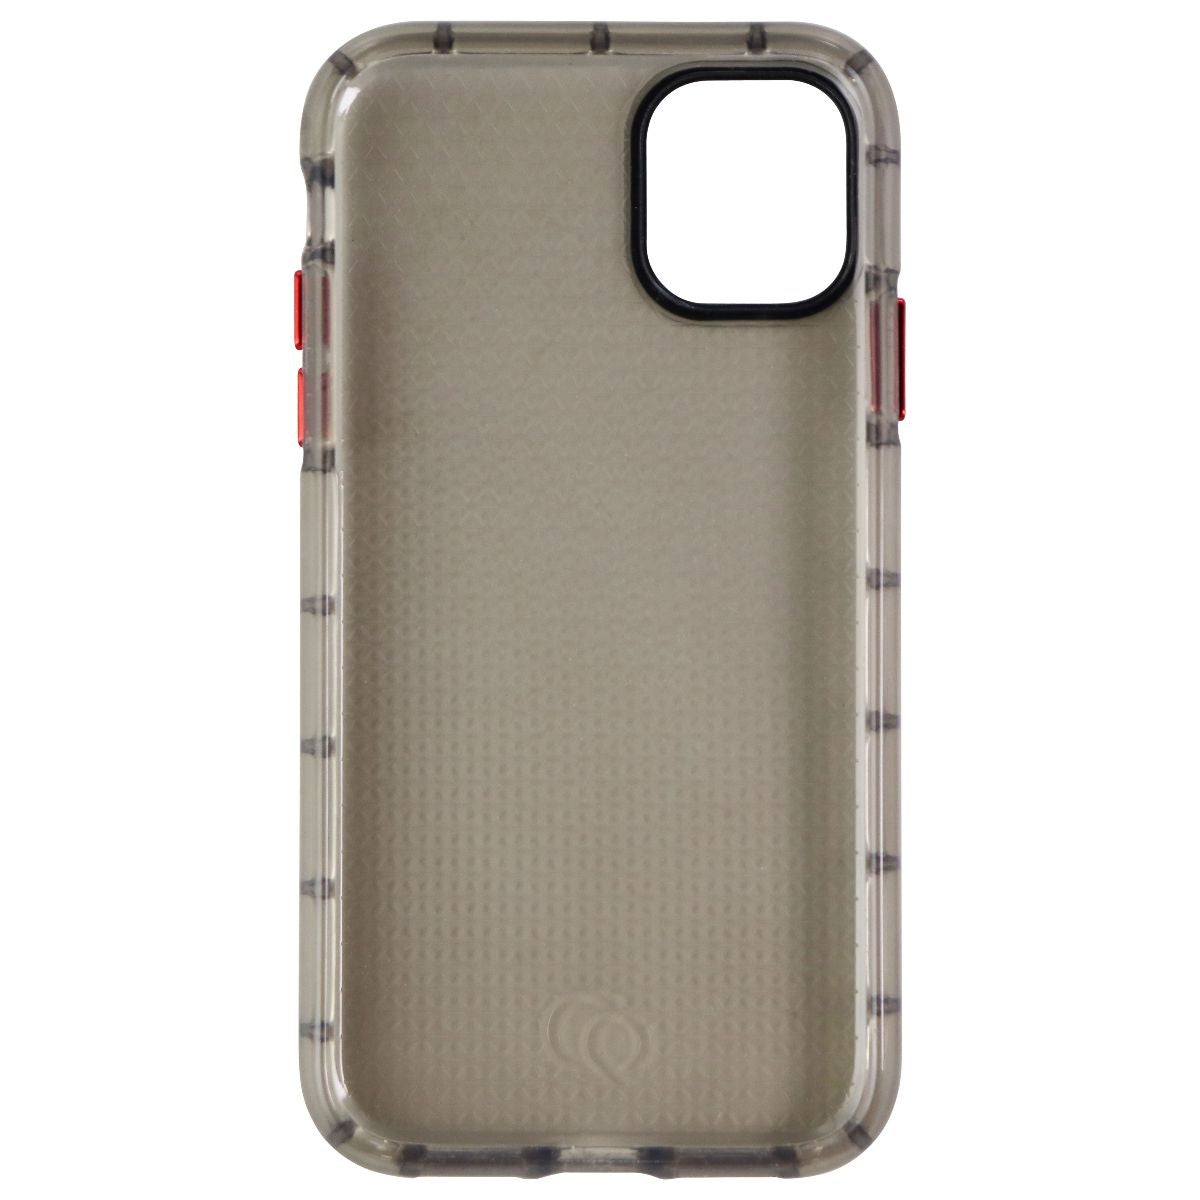 Nimbus9 Phantom 2 Series Gel Flexible Case for Apple iPhone 11 - Smoke (Gray) Cell Phone - Cases, Covers & Skins Nimbus9    - Simple Cell Bulk Wholesale Pricing - USA Seller